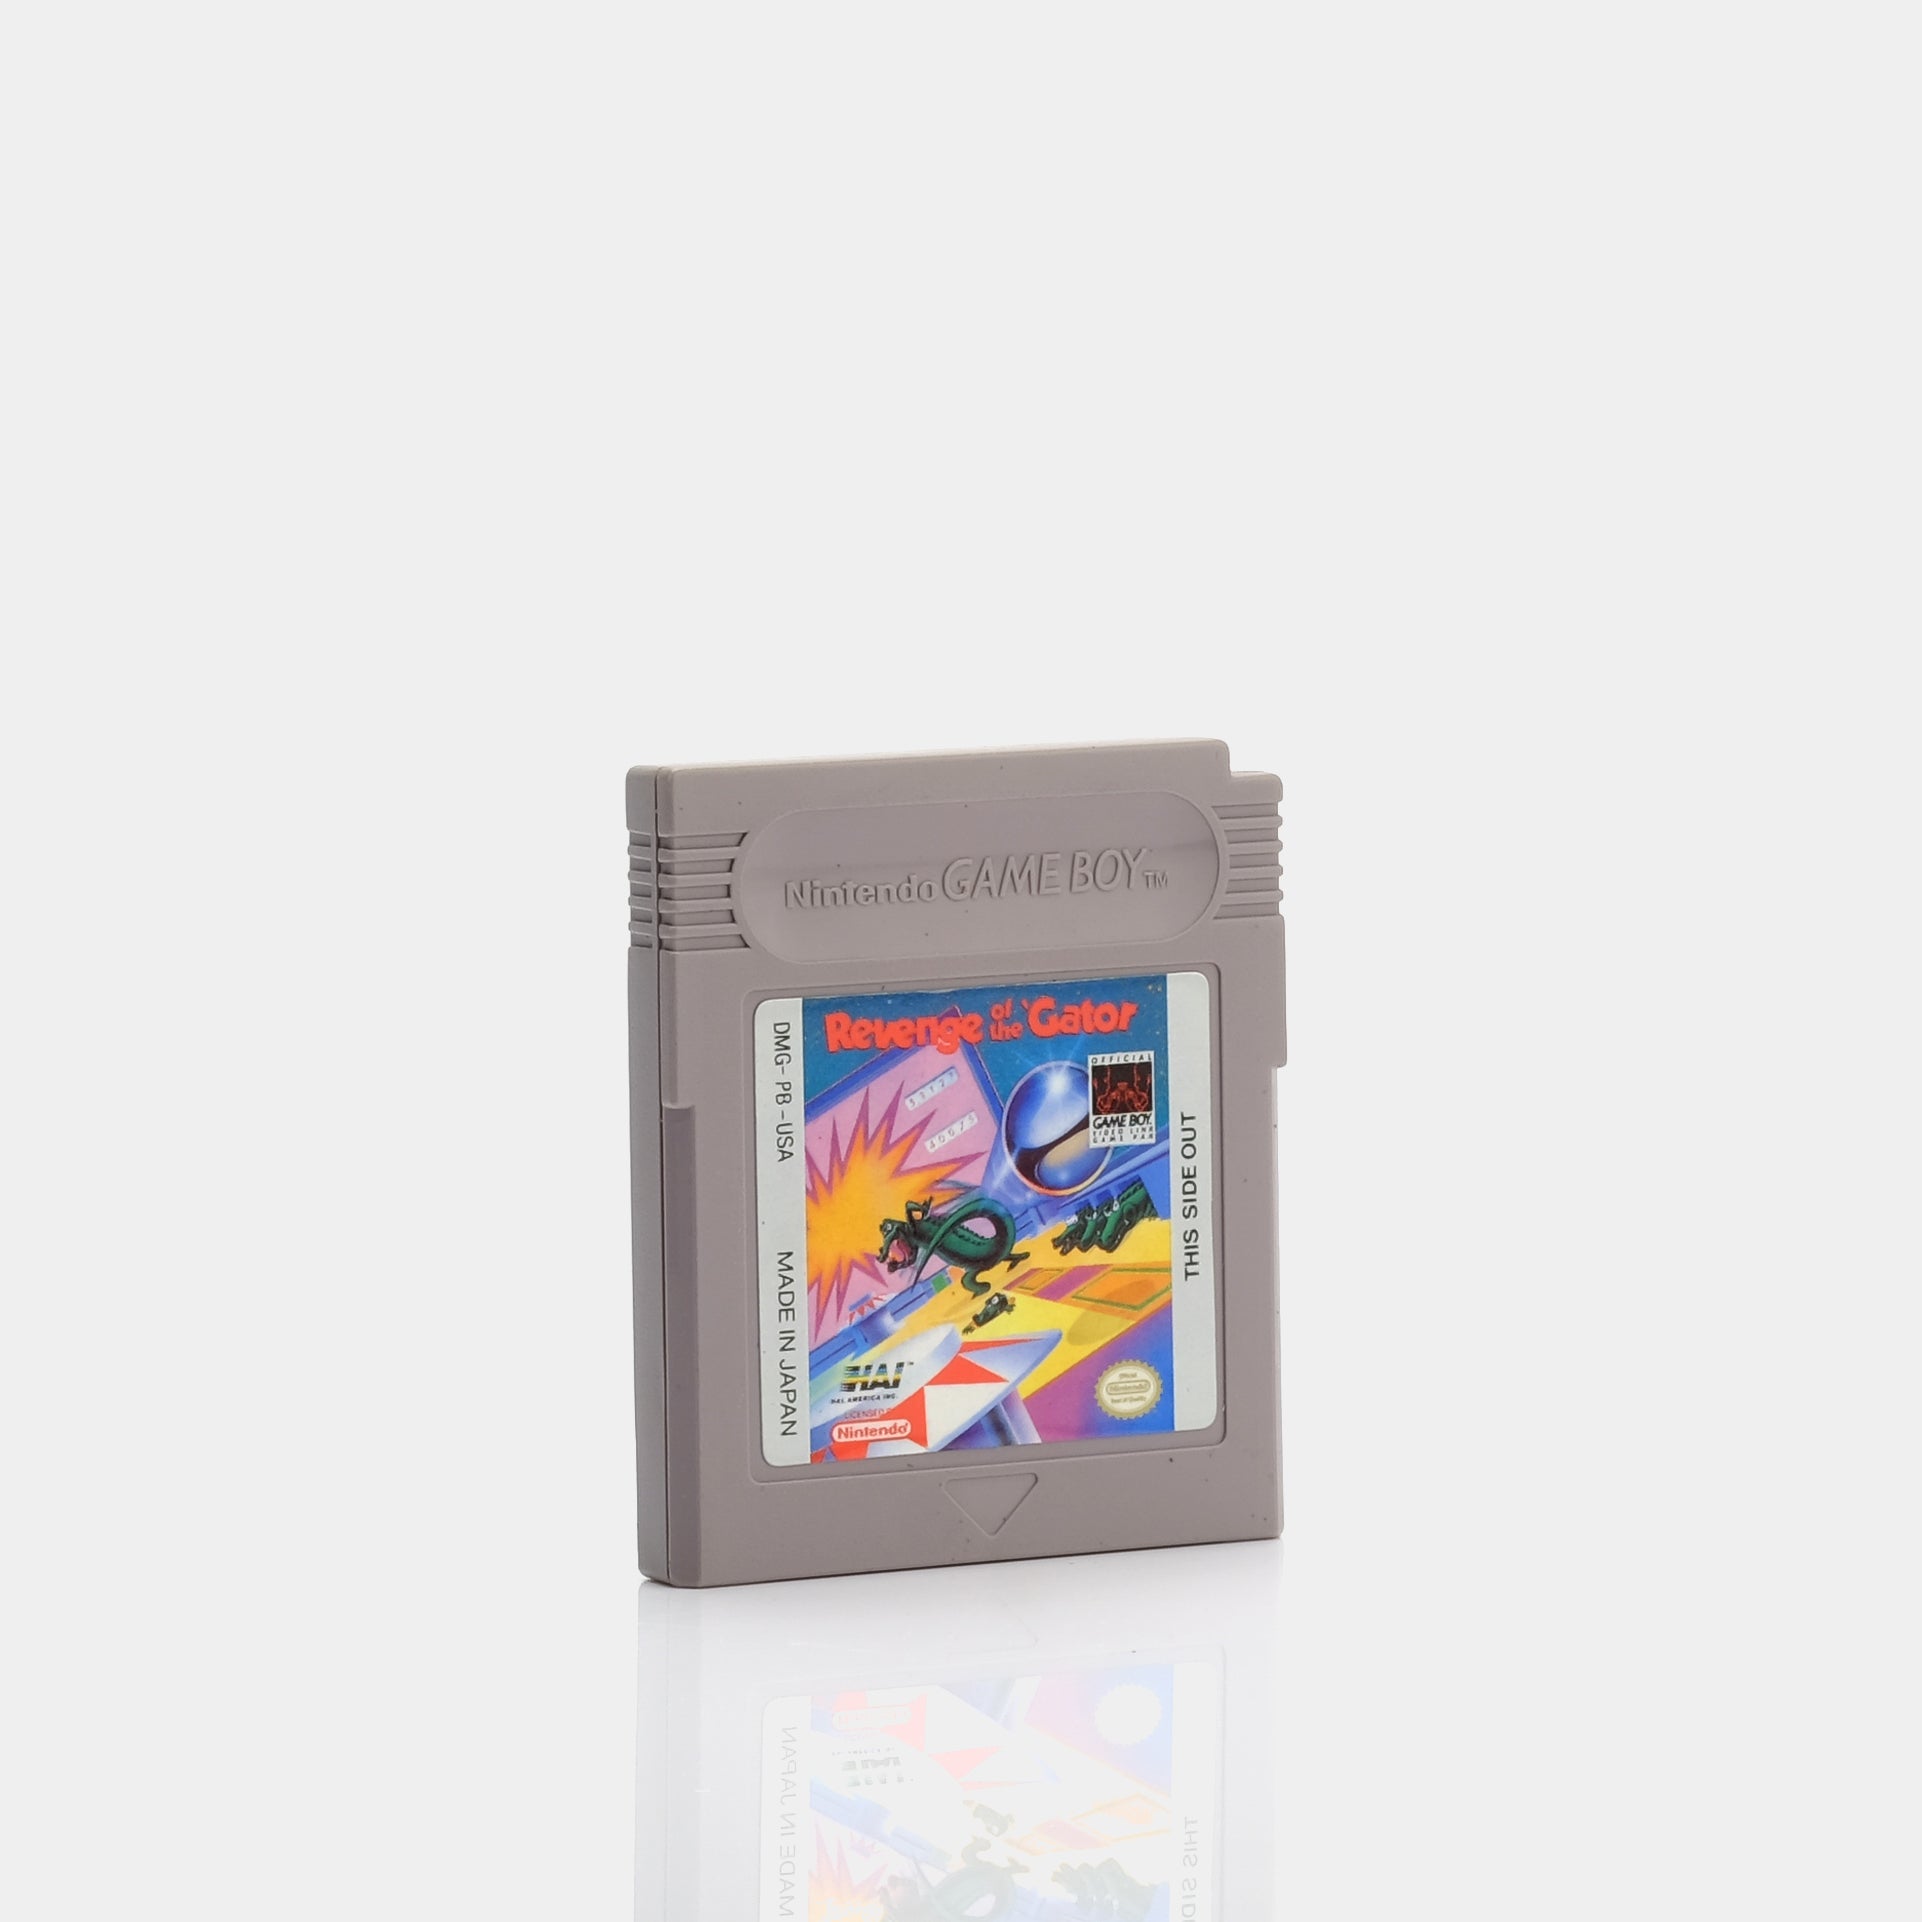 Revenge of the Gator Game Boy Game